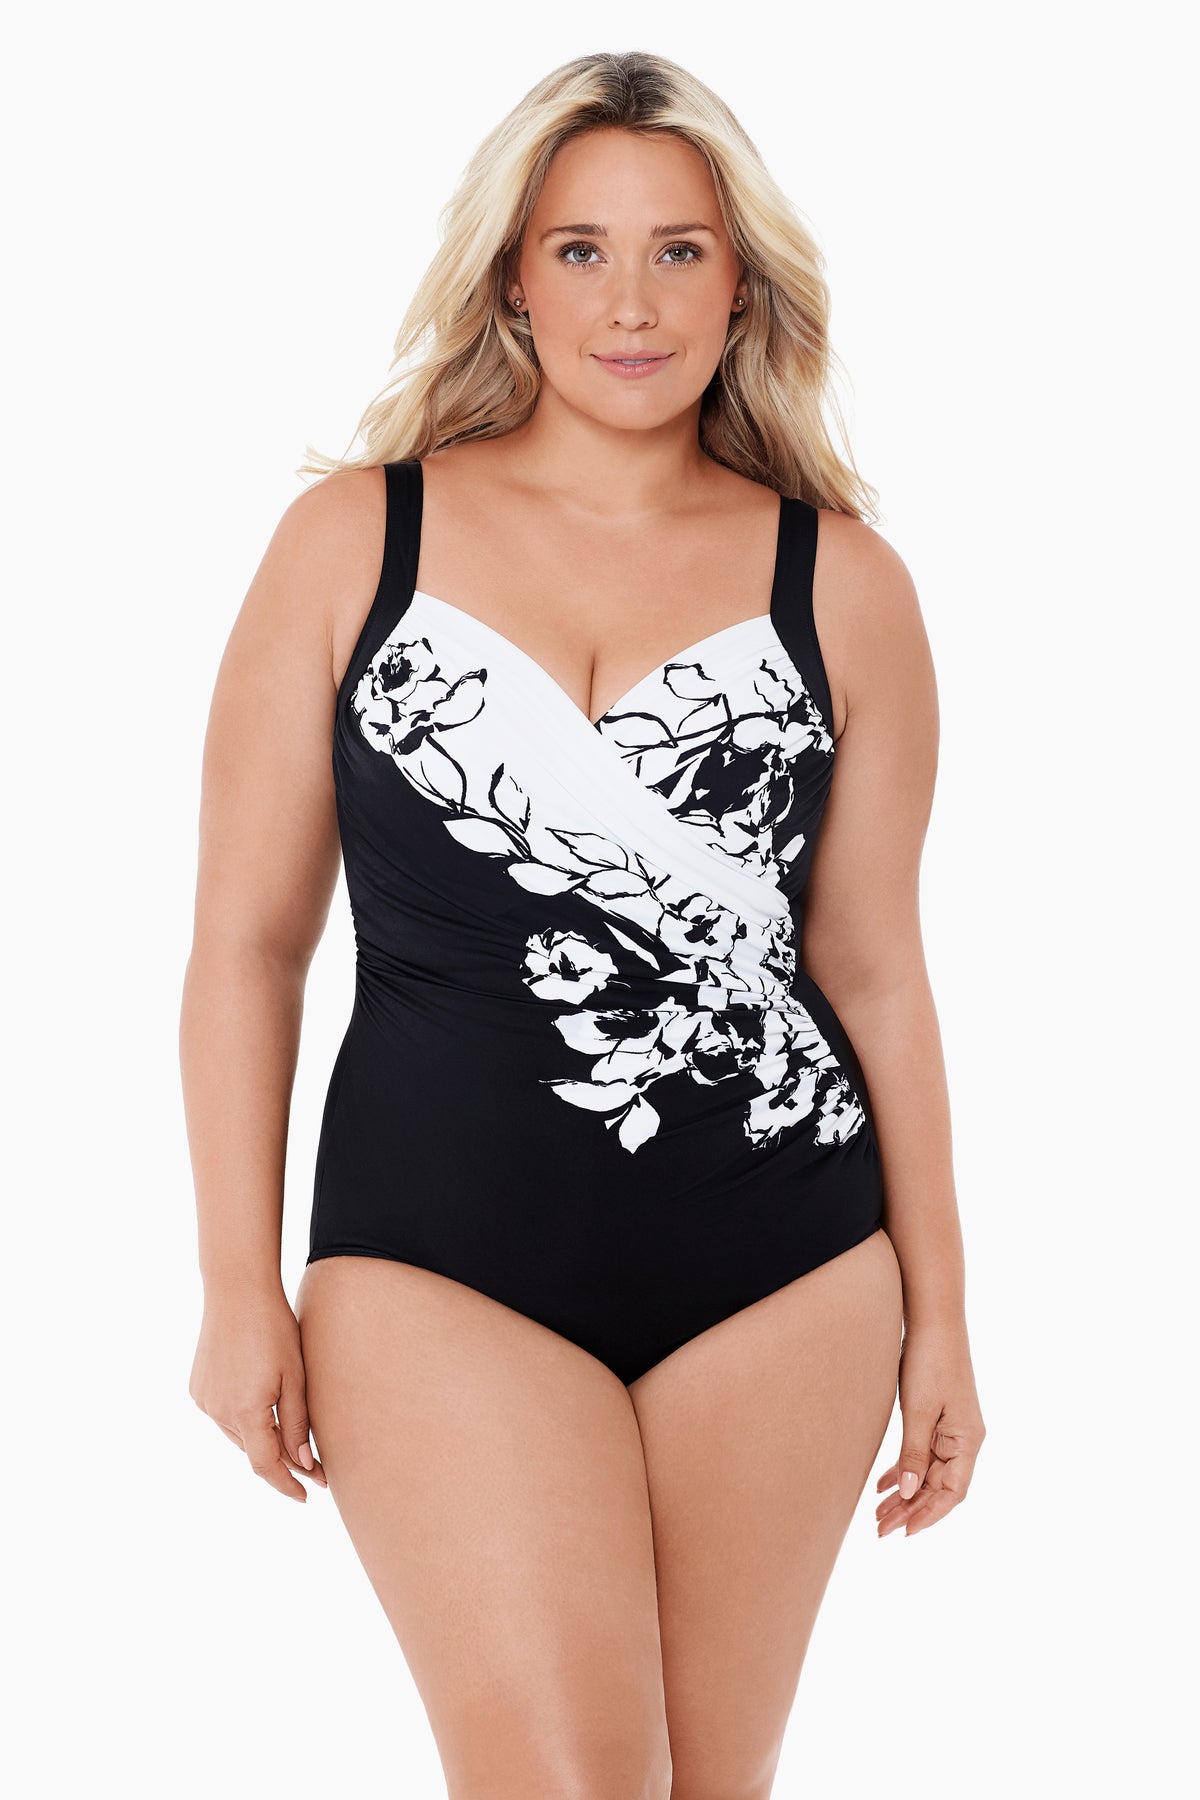 AONTUS Women's One Piece Plus Size Swimsuits Tummy Control Swimwear Bathing  Suit